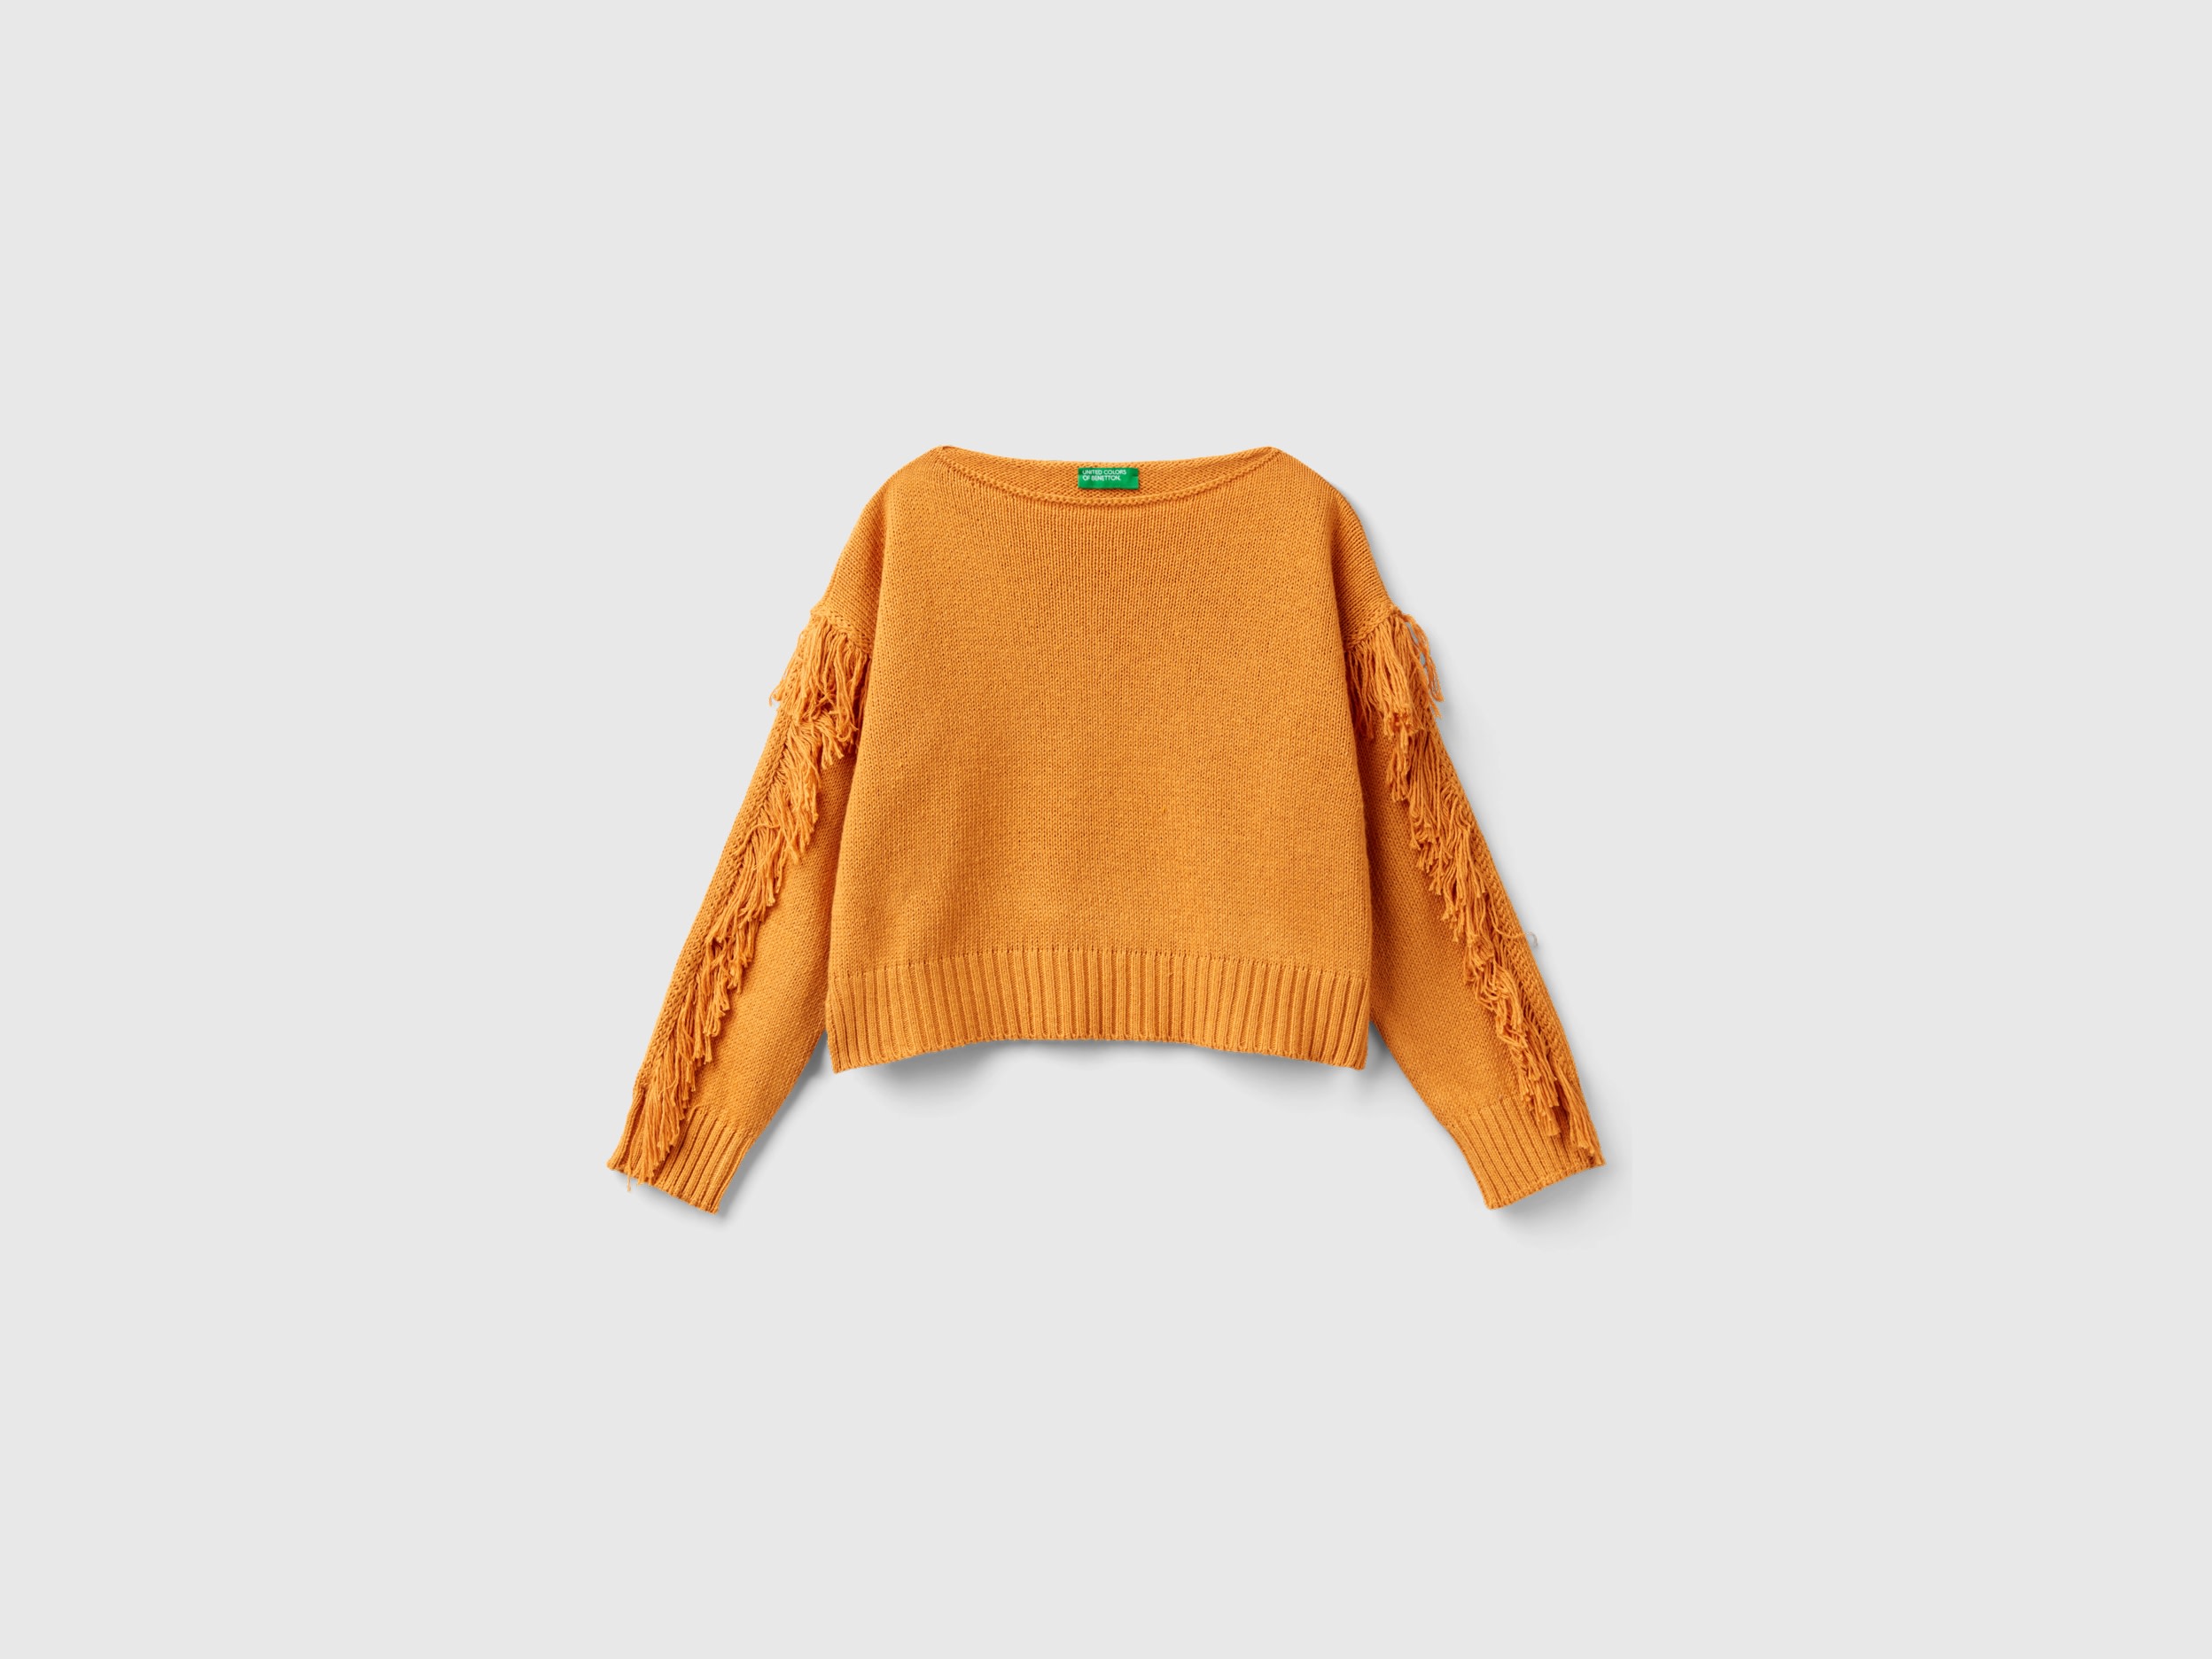 Image of Benetton, Sweater With Fringe, size 3XL, Camel, Kids